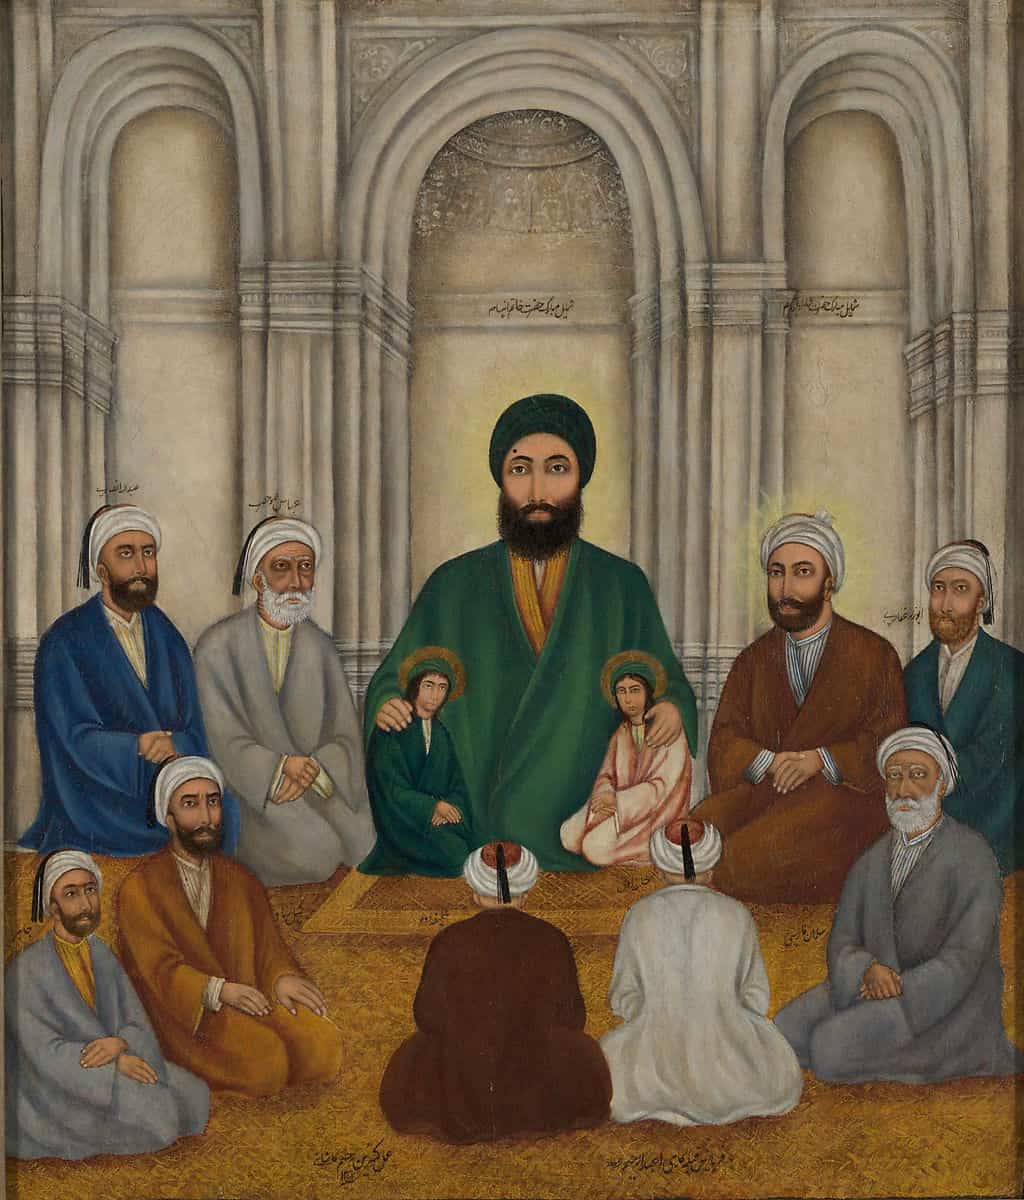 speech on the life of prophet muhammad